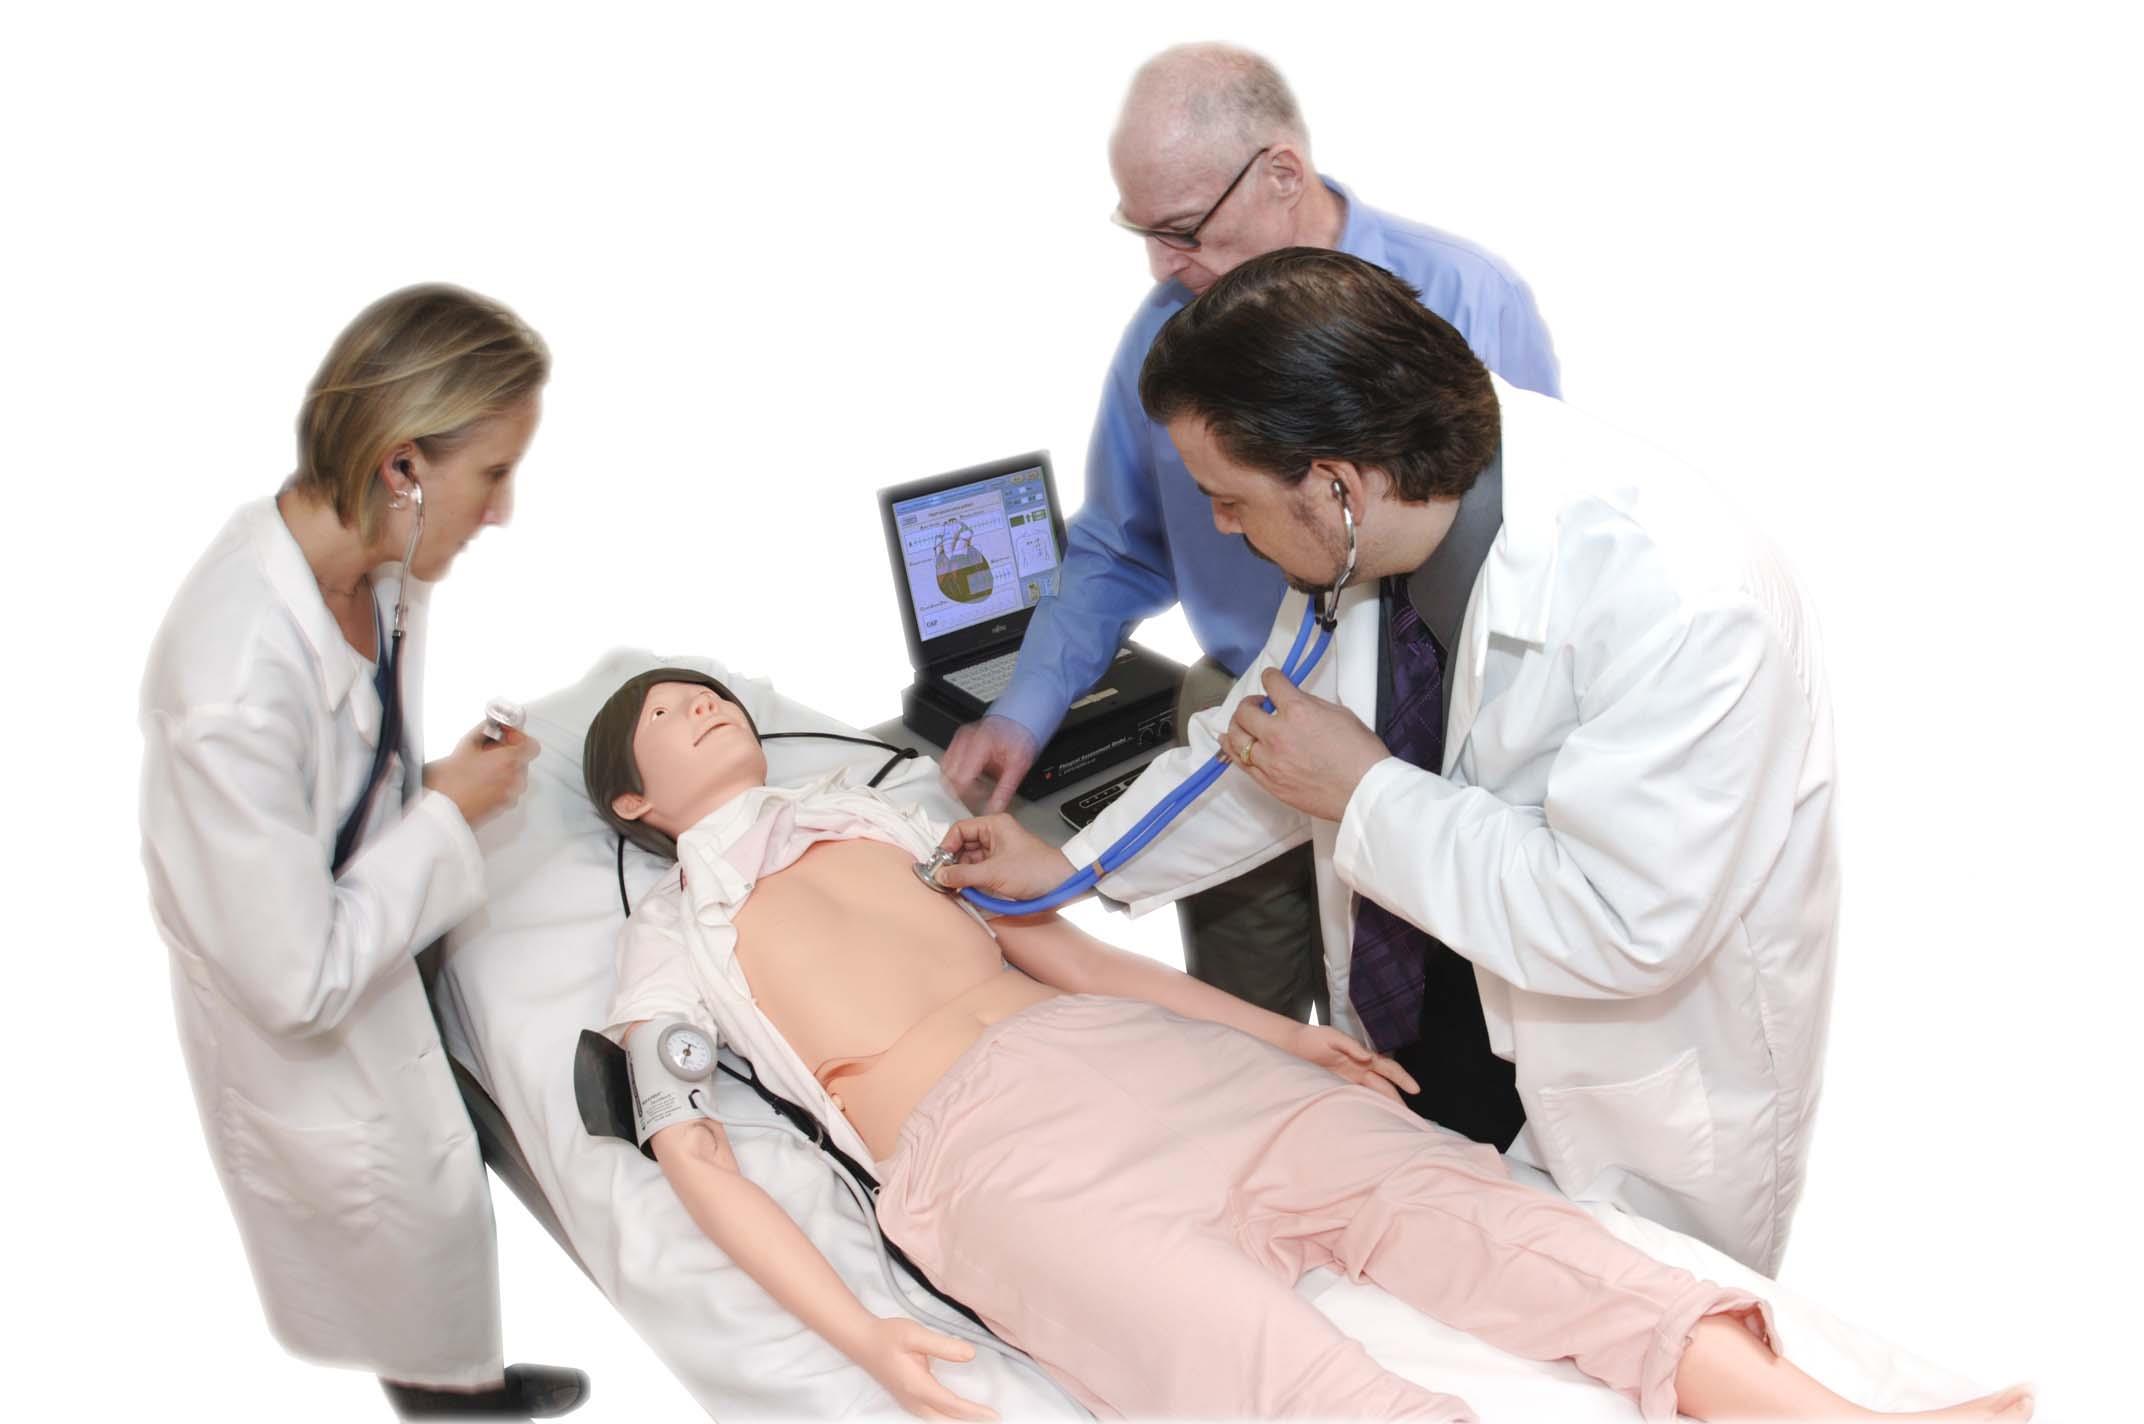 Patient Simulator "Physiko Plus"